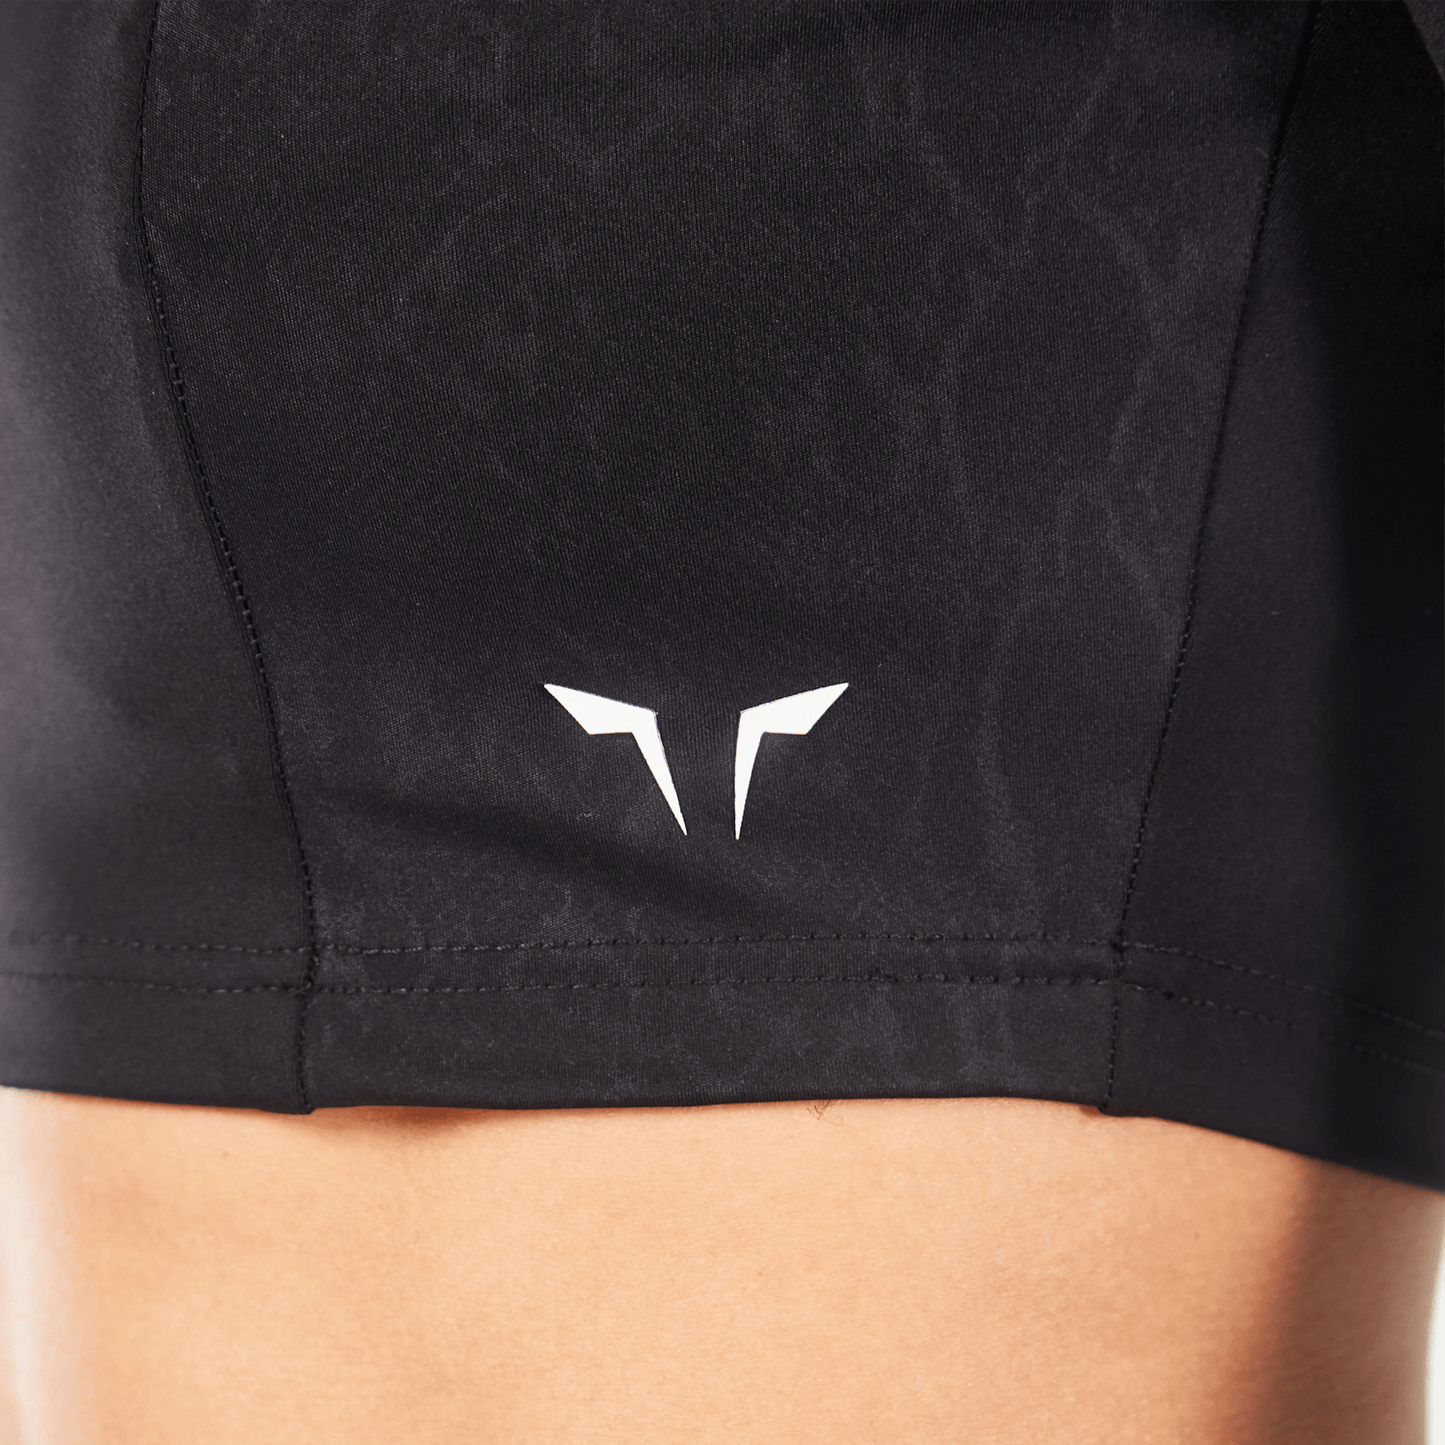 squatwolf-workout-clothes-qtr-zip-serpent-top-black-gym-t-shirts-for-women